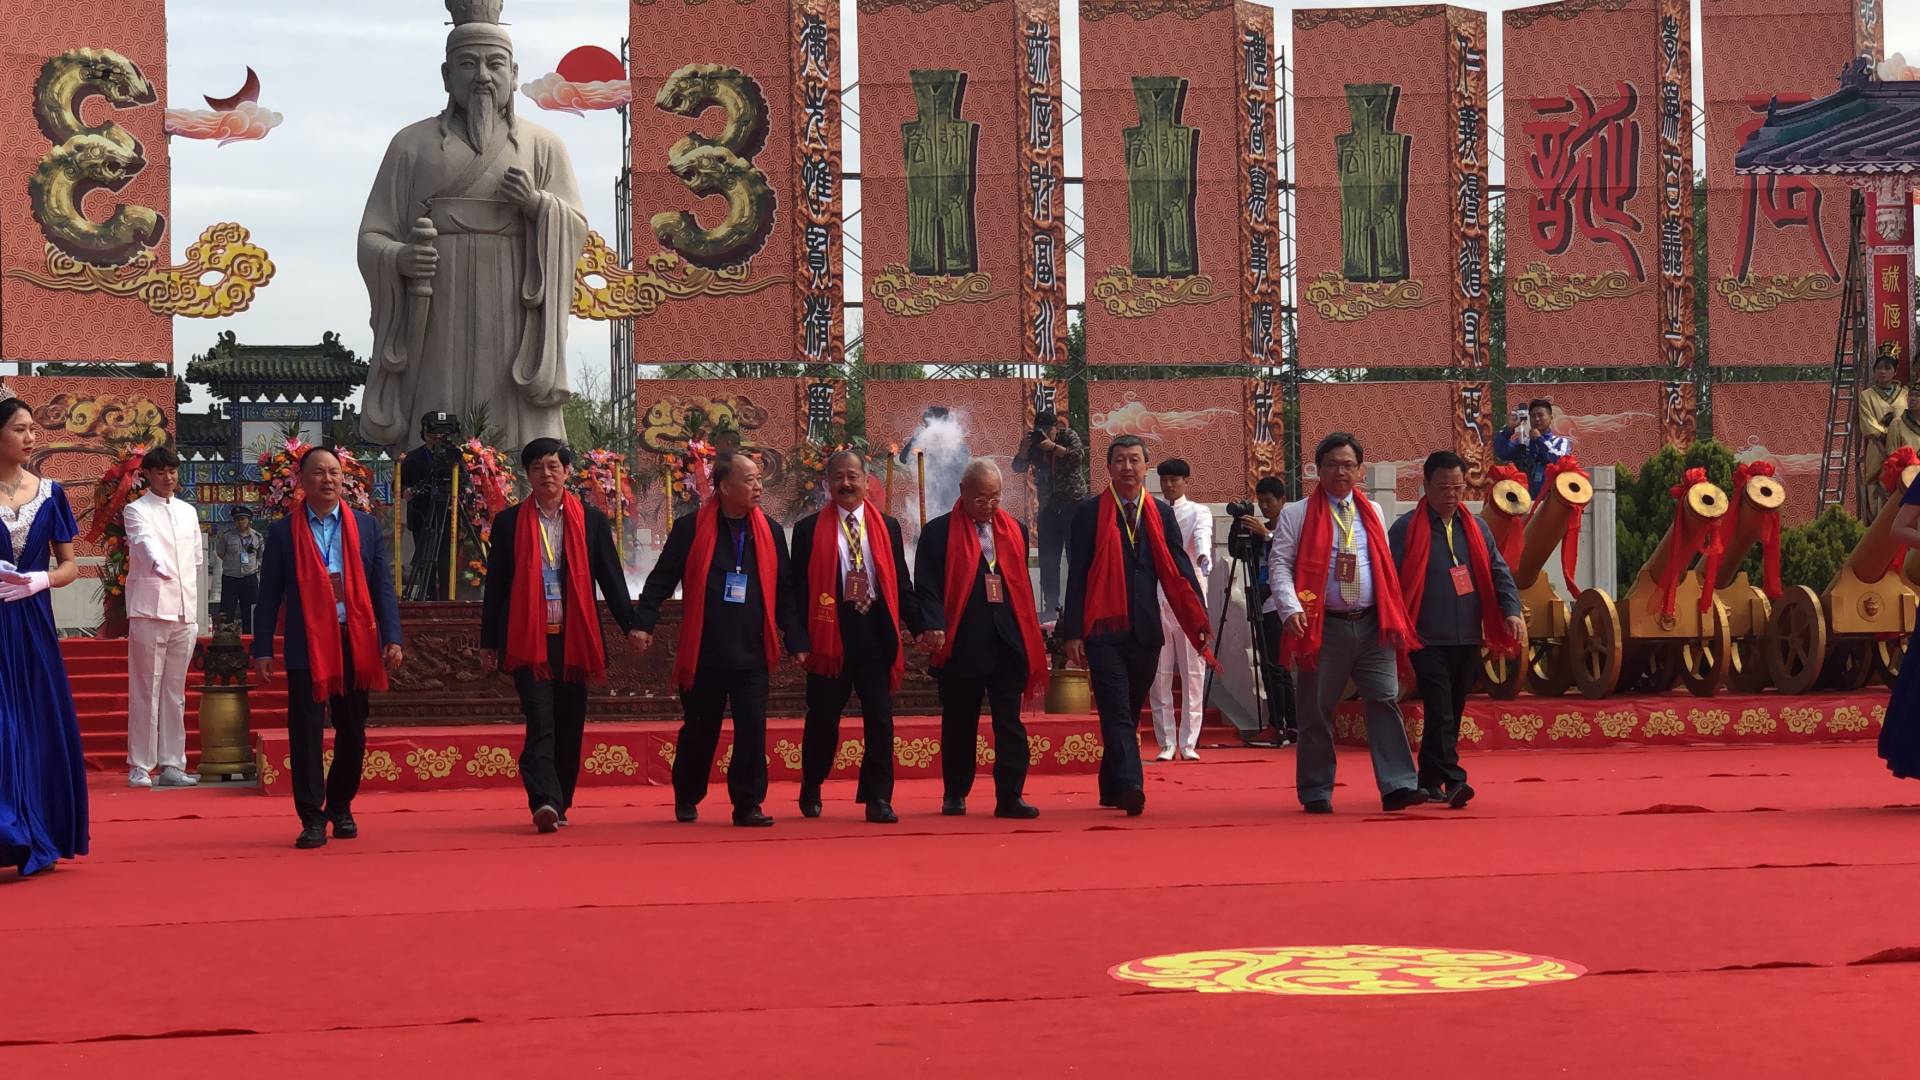 Tan Sri Attend the grand ancestral ceremony to commemorate the 3111th anniversary of the birth of Bigan